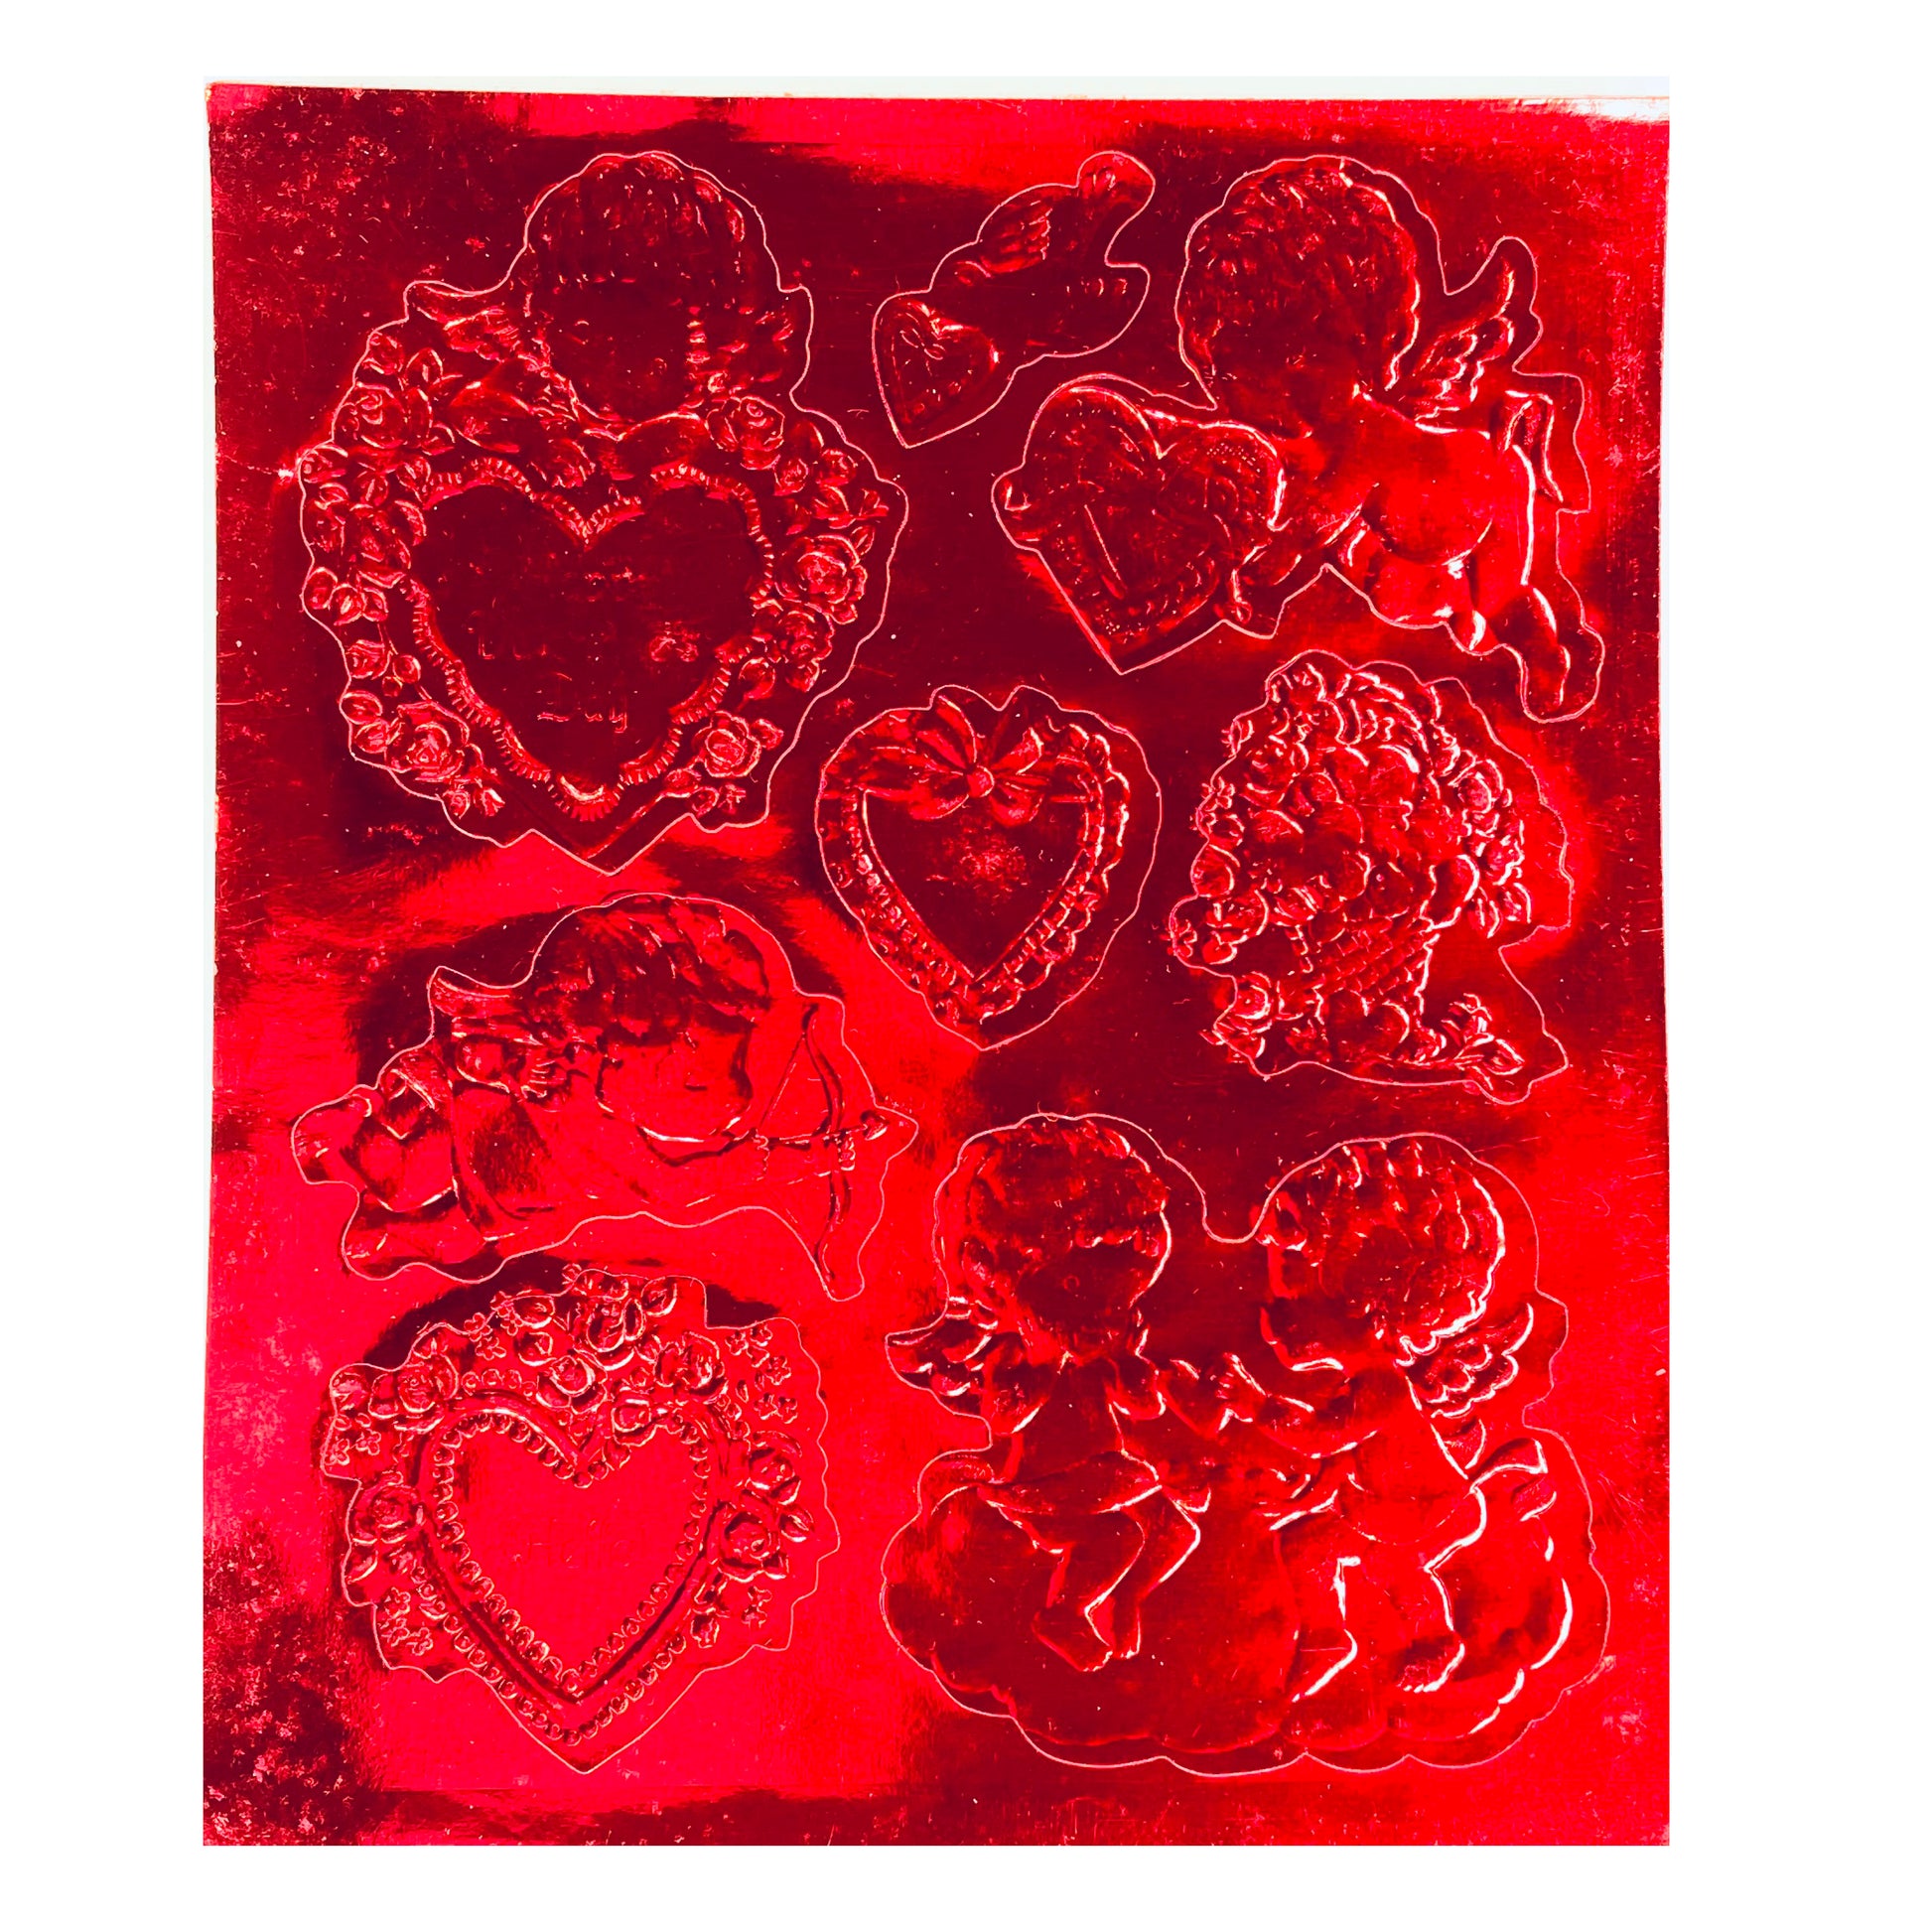 Heart Stickers, Valentines Day Stickers